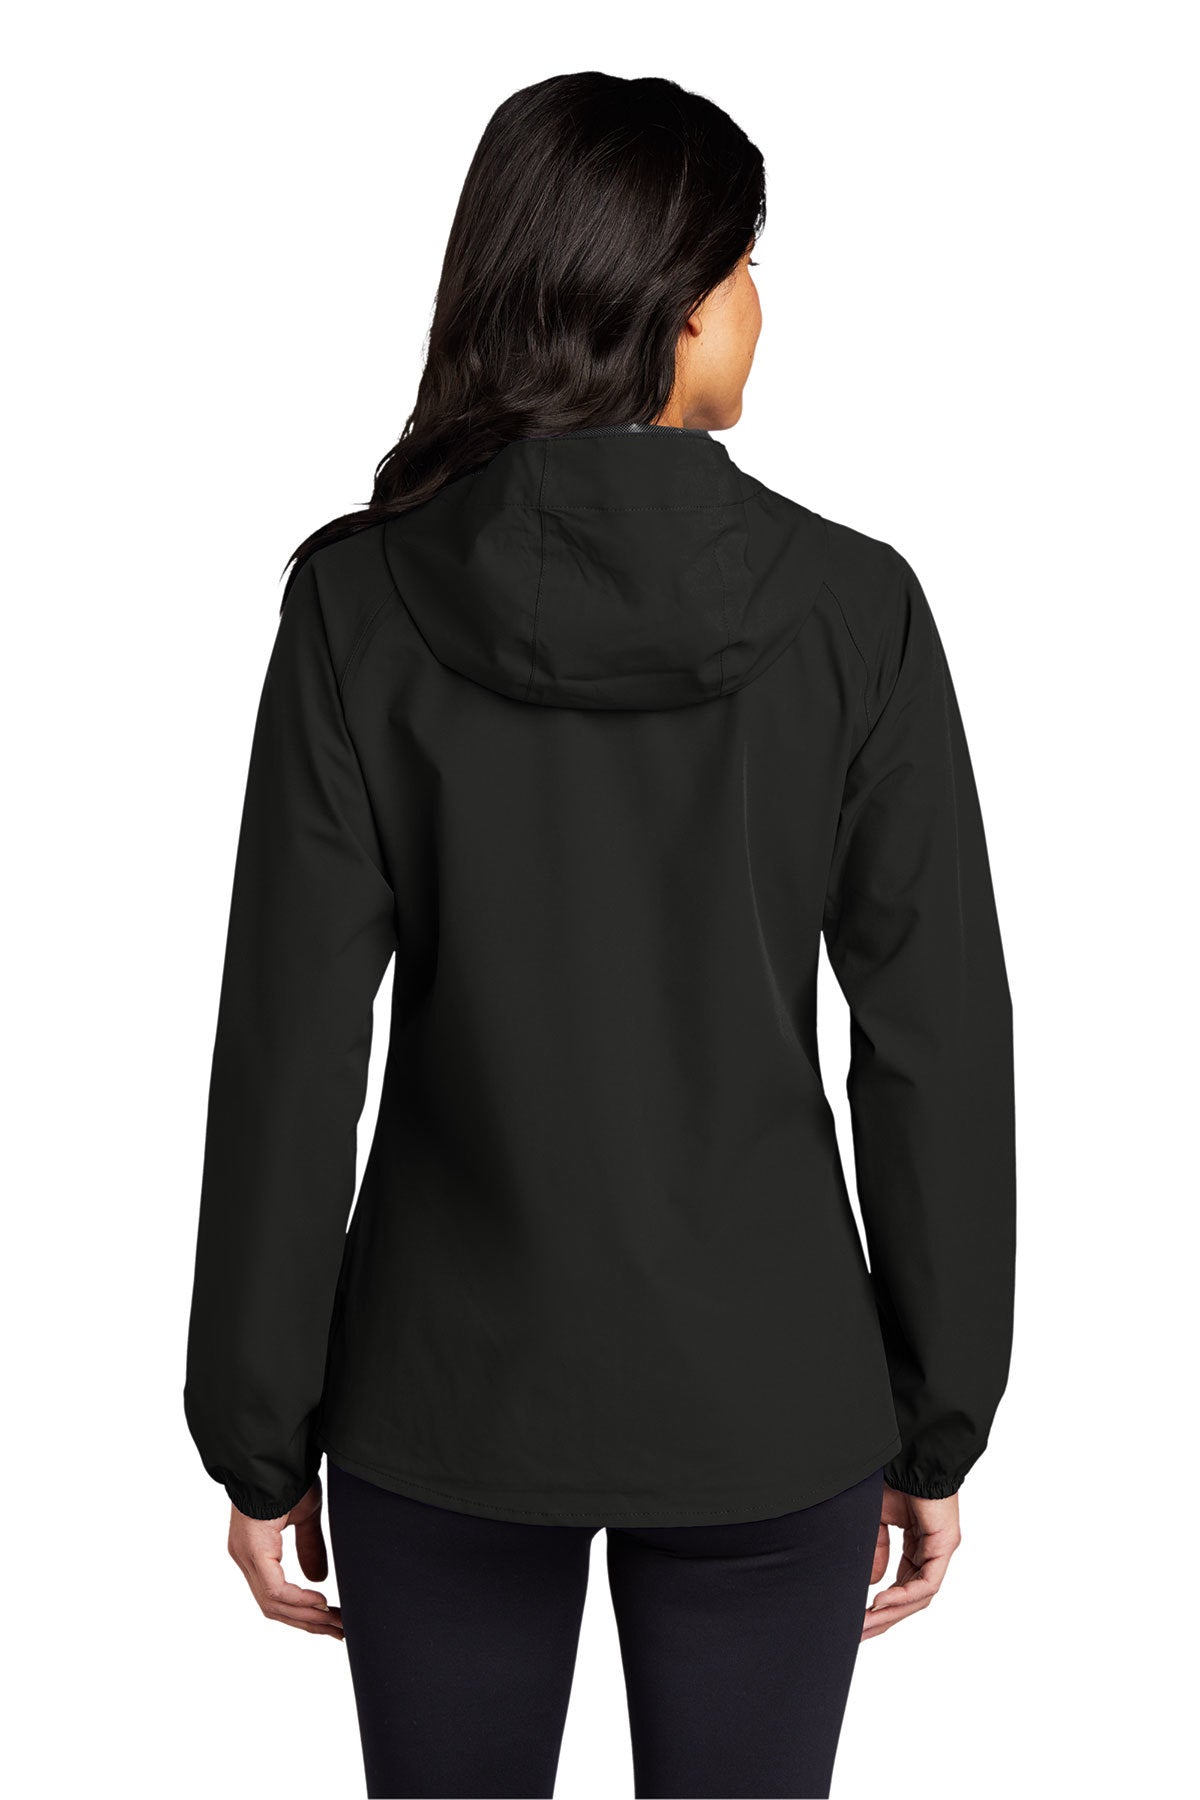 Port Authority Ladies Essential Branded Rain Jackets, Deep Black